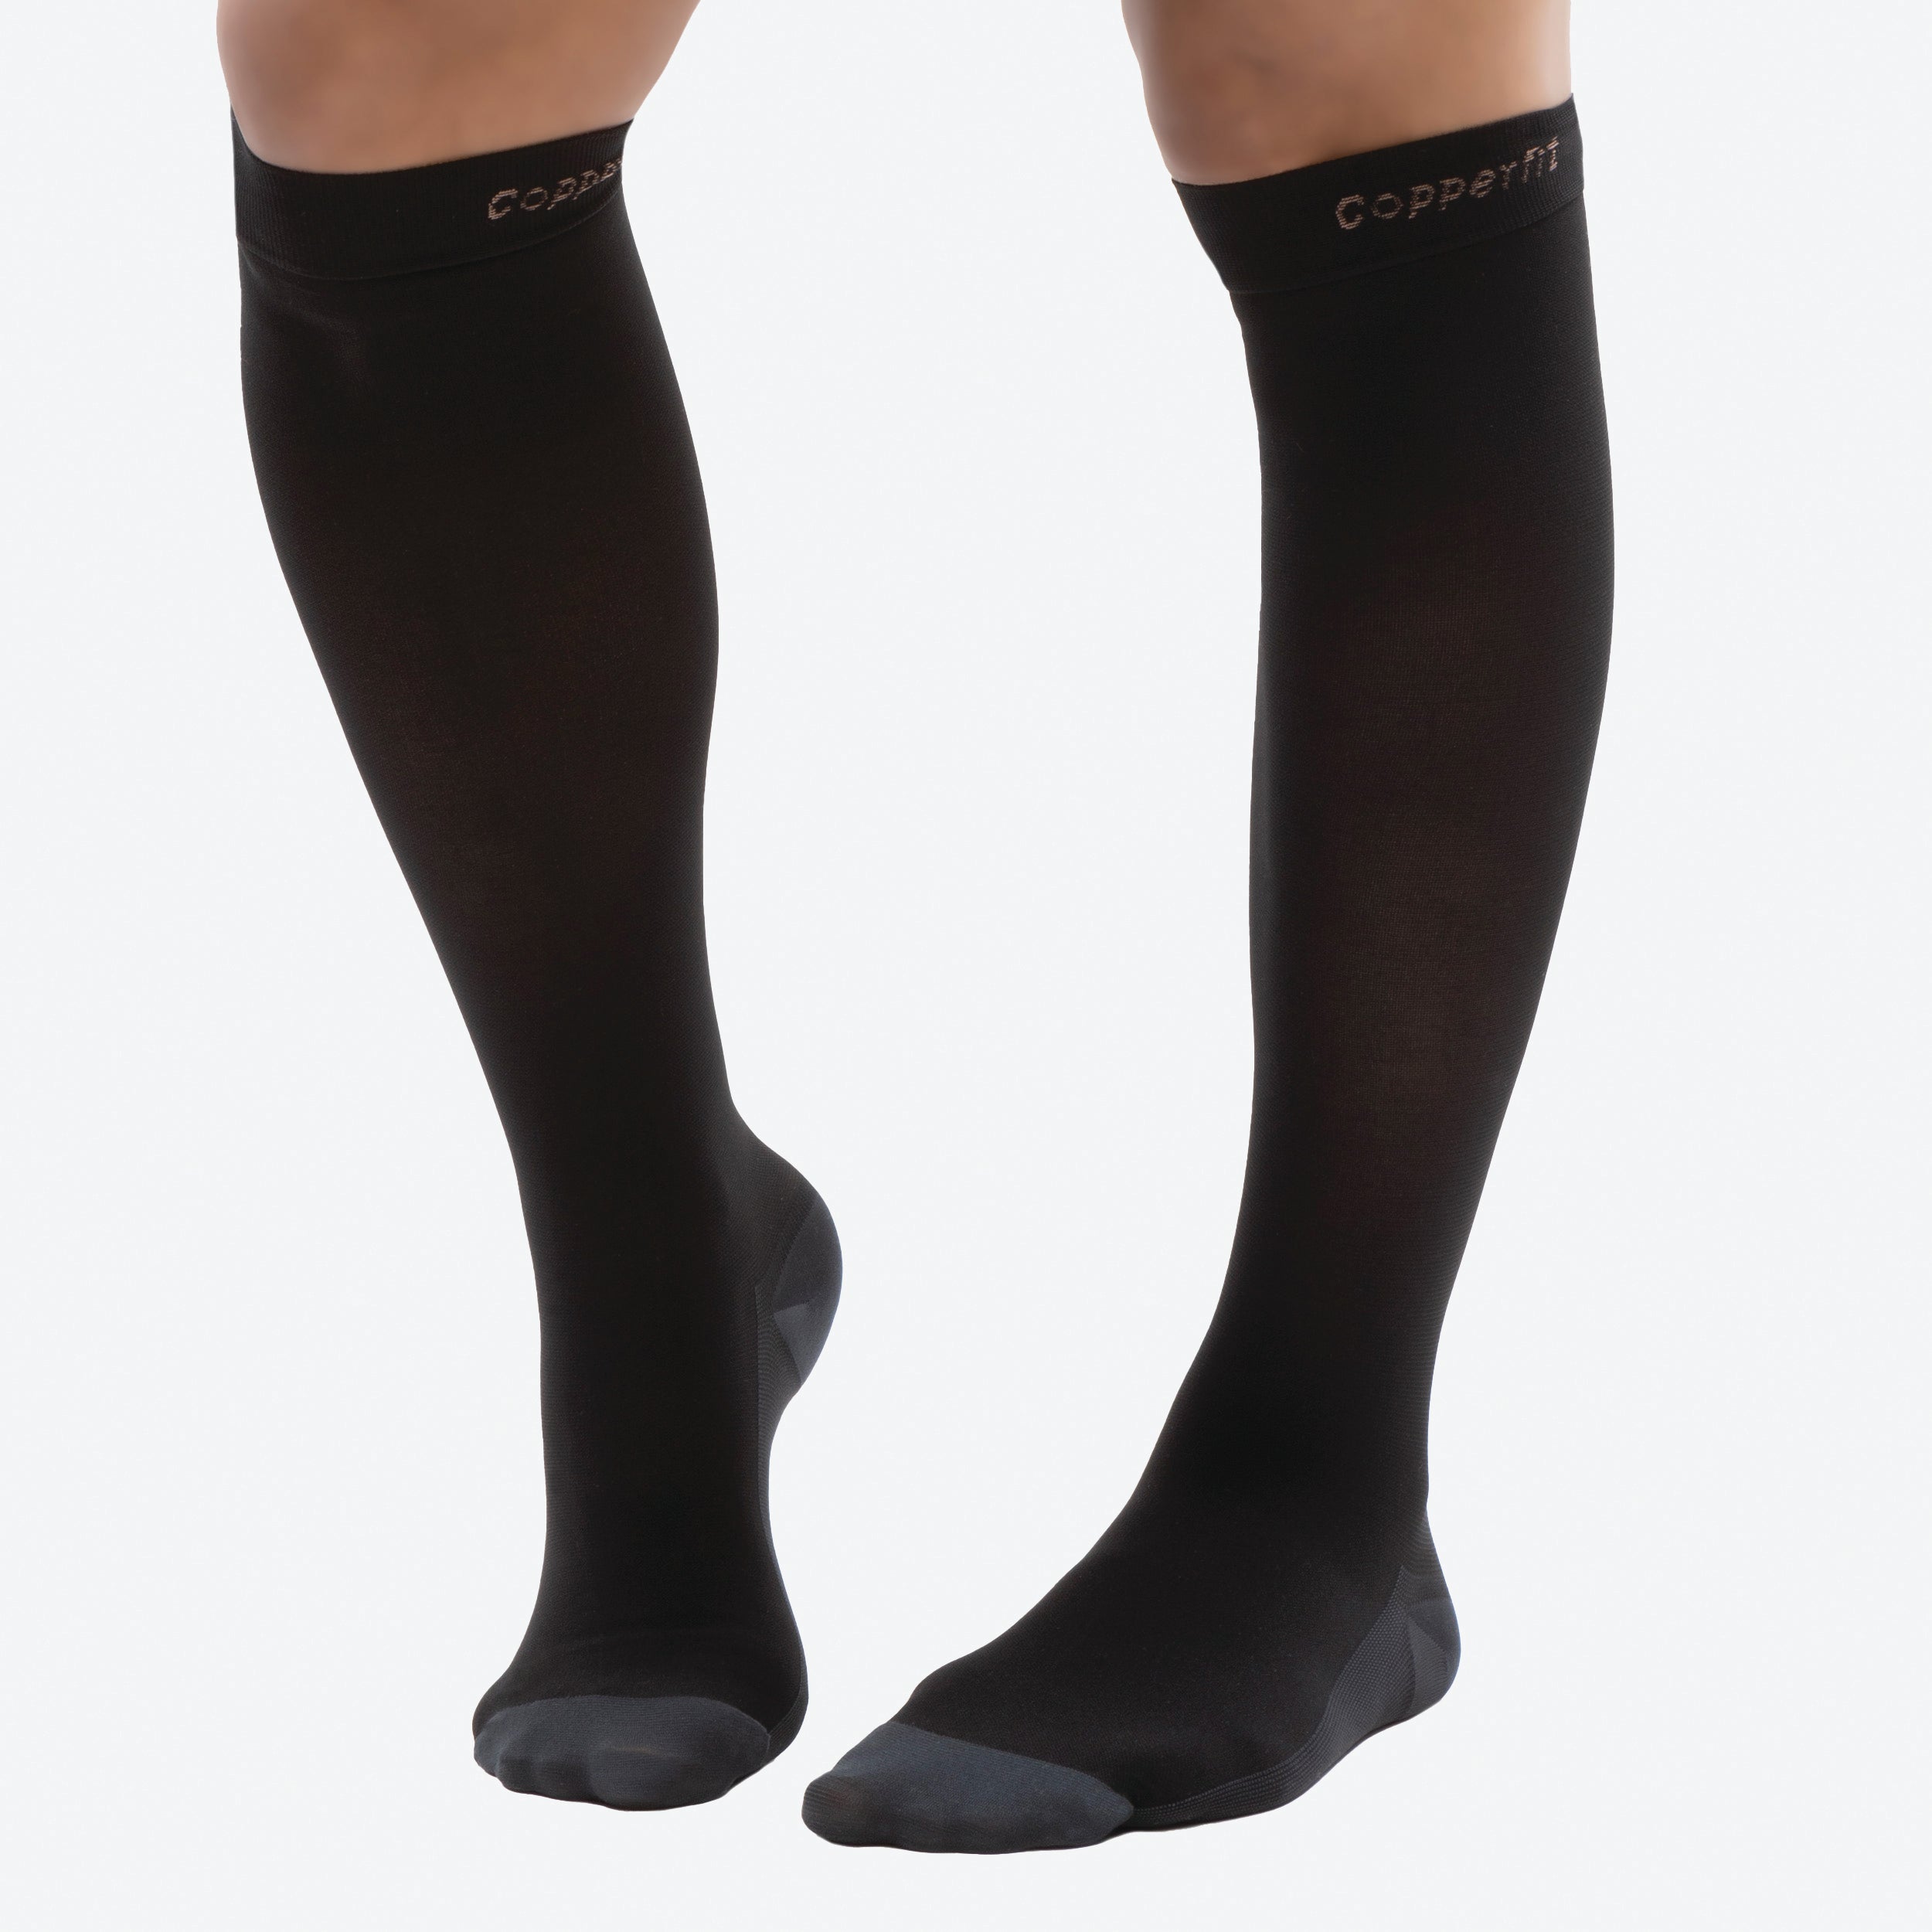 Buy New Medical Grade Compression Socks at Copper Fit USA®